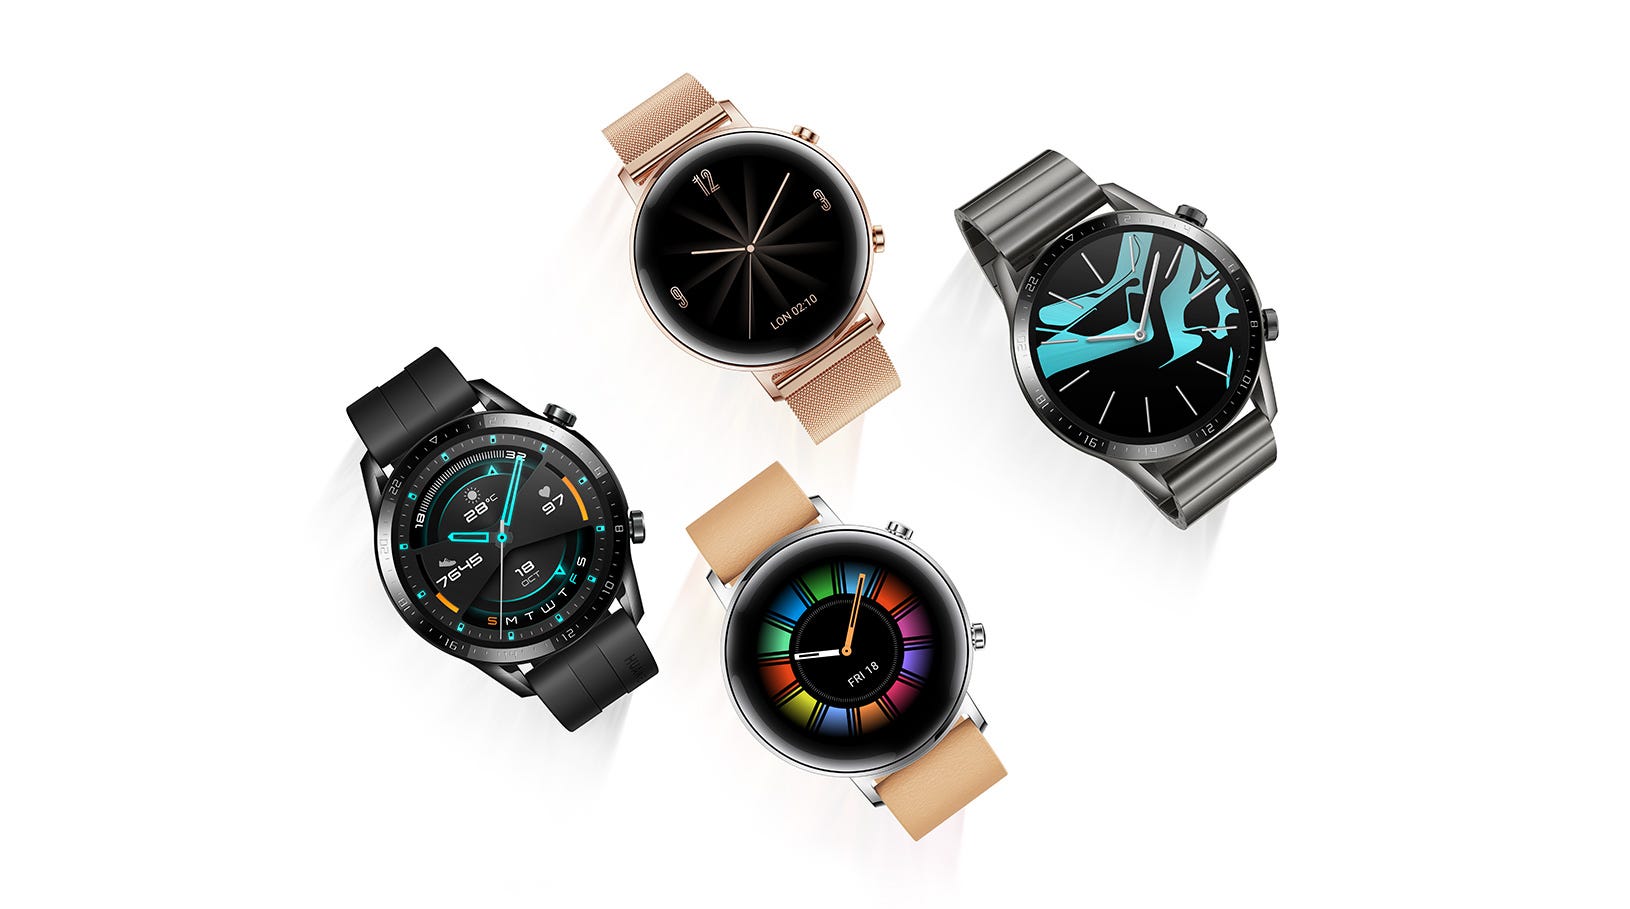 Huawei Watch GT 2: Smart Watch with 